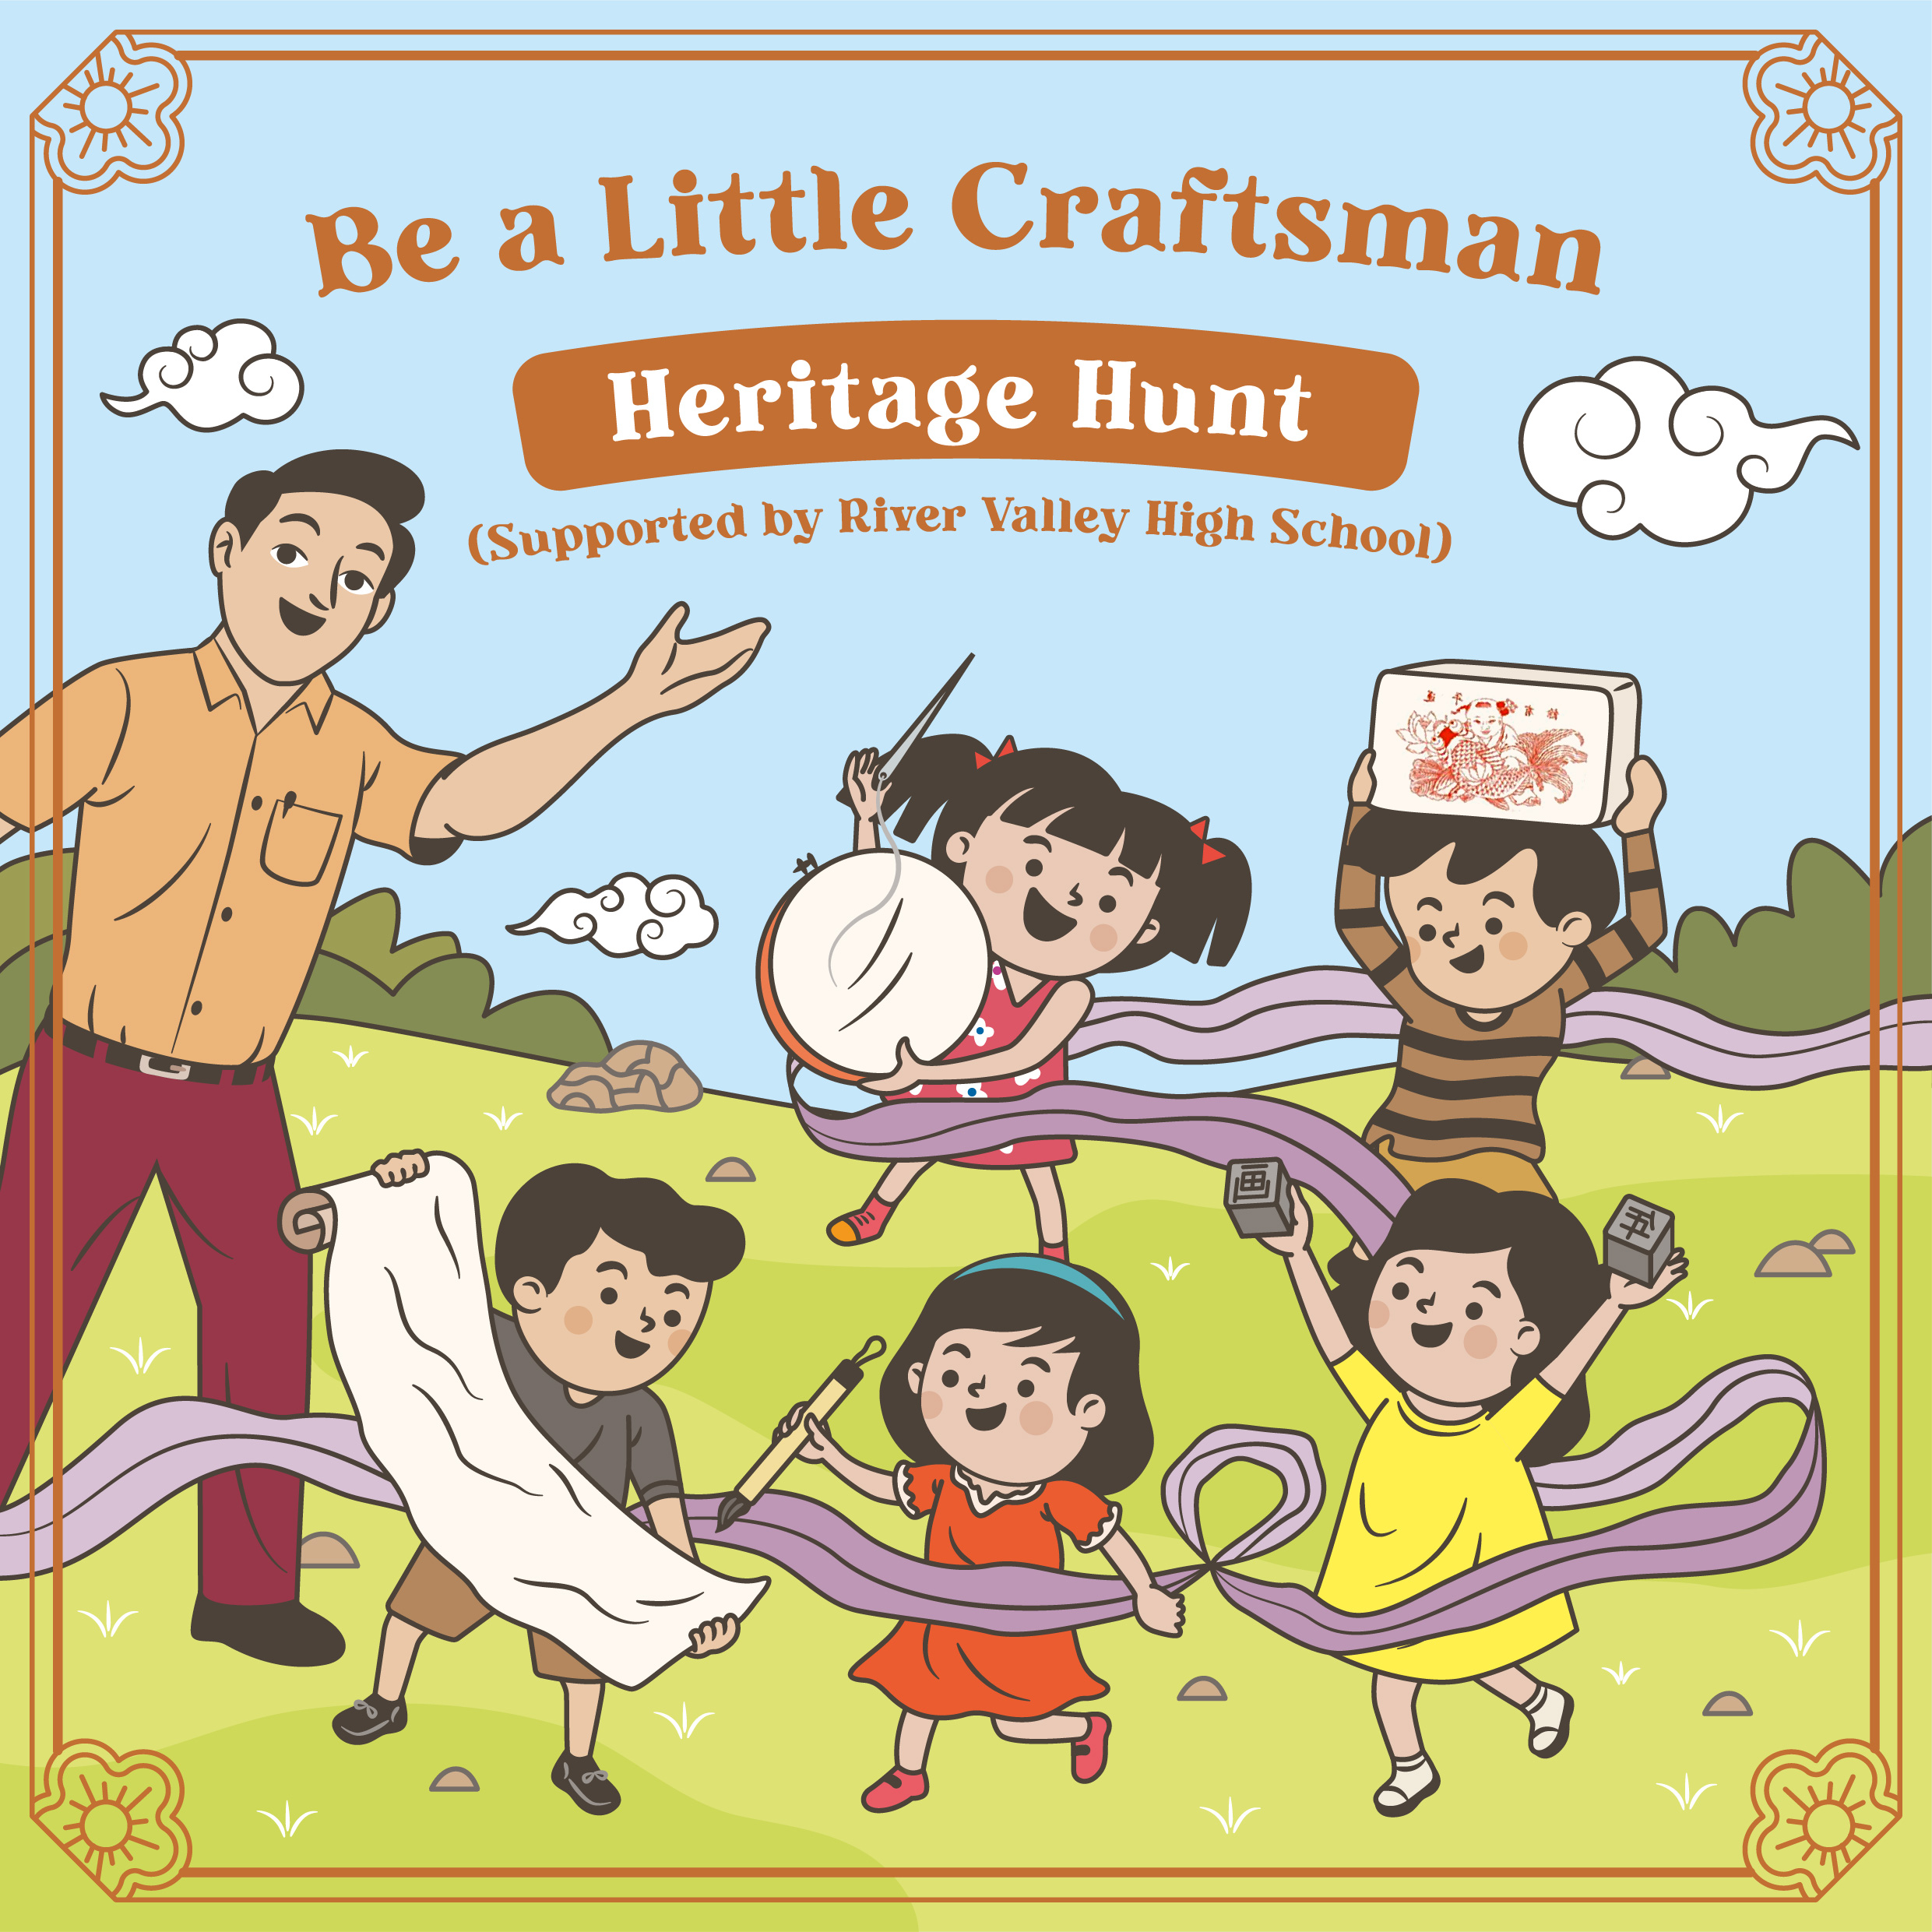 220406_1_be_a_little_craftsman_heritage_hunt